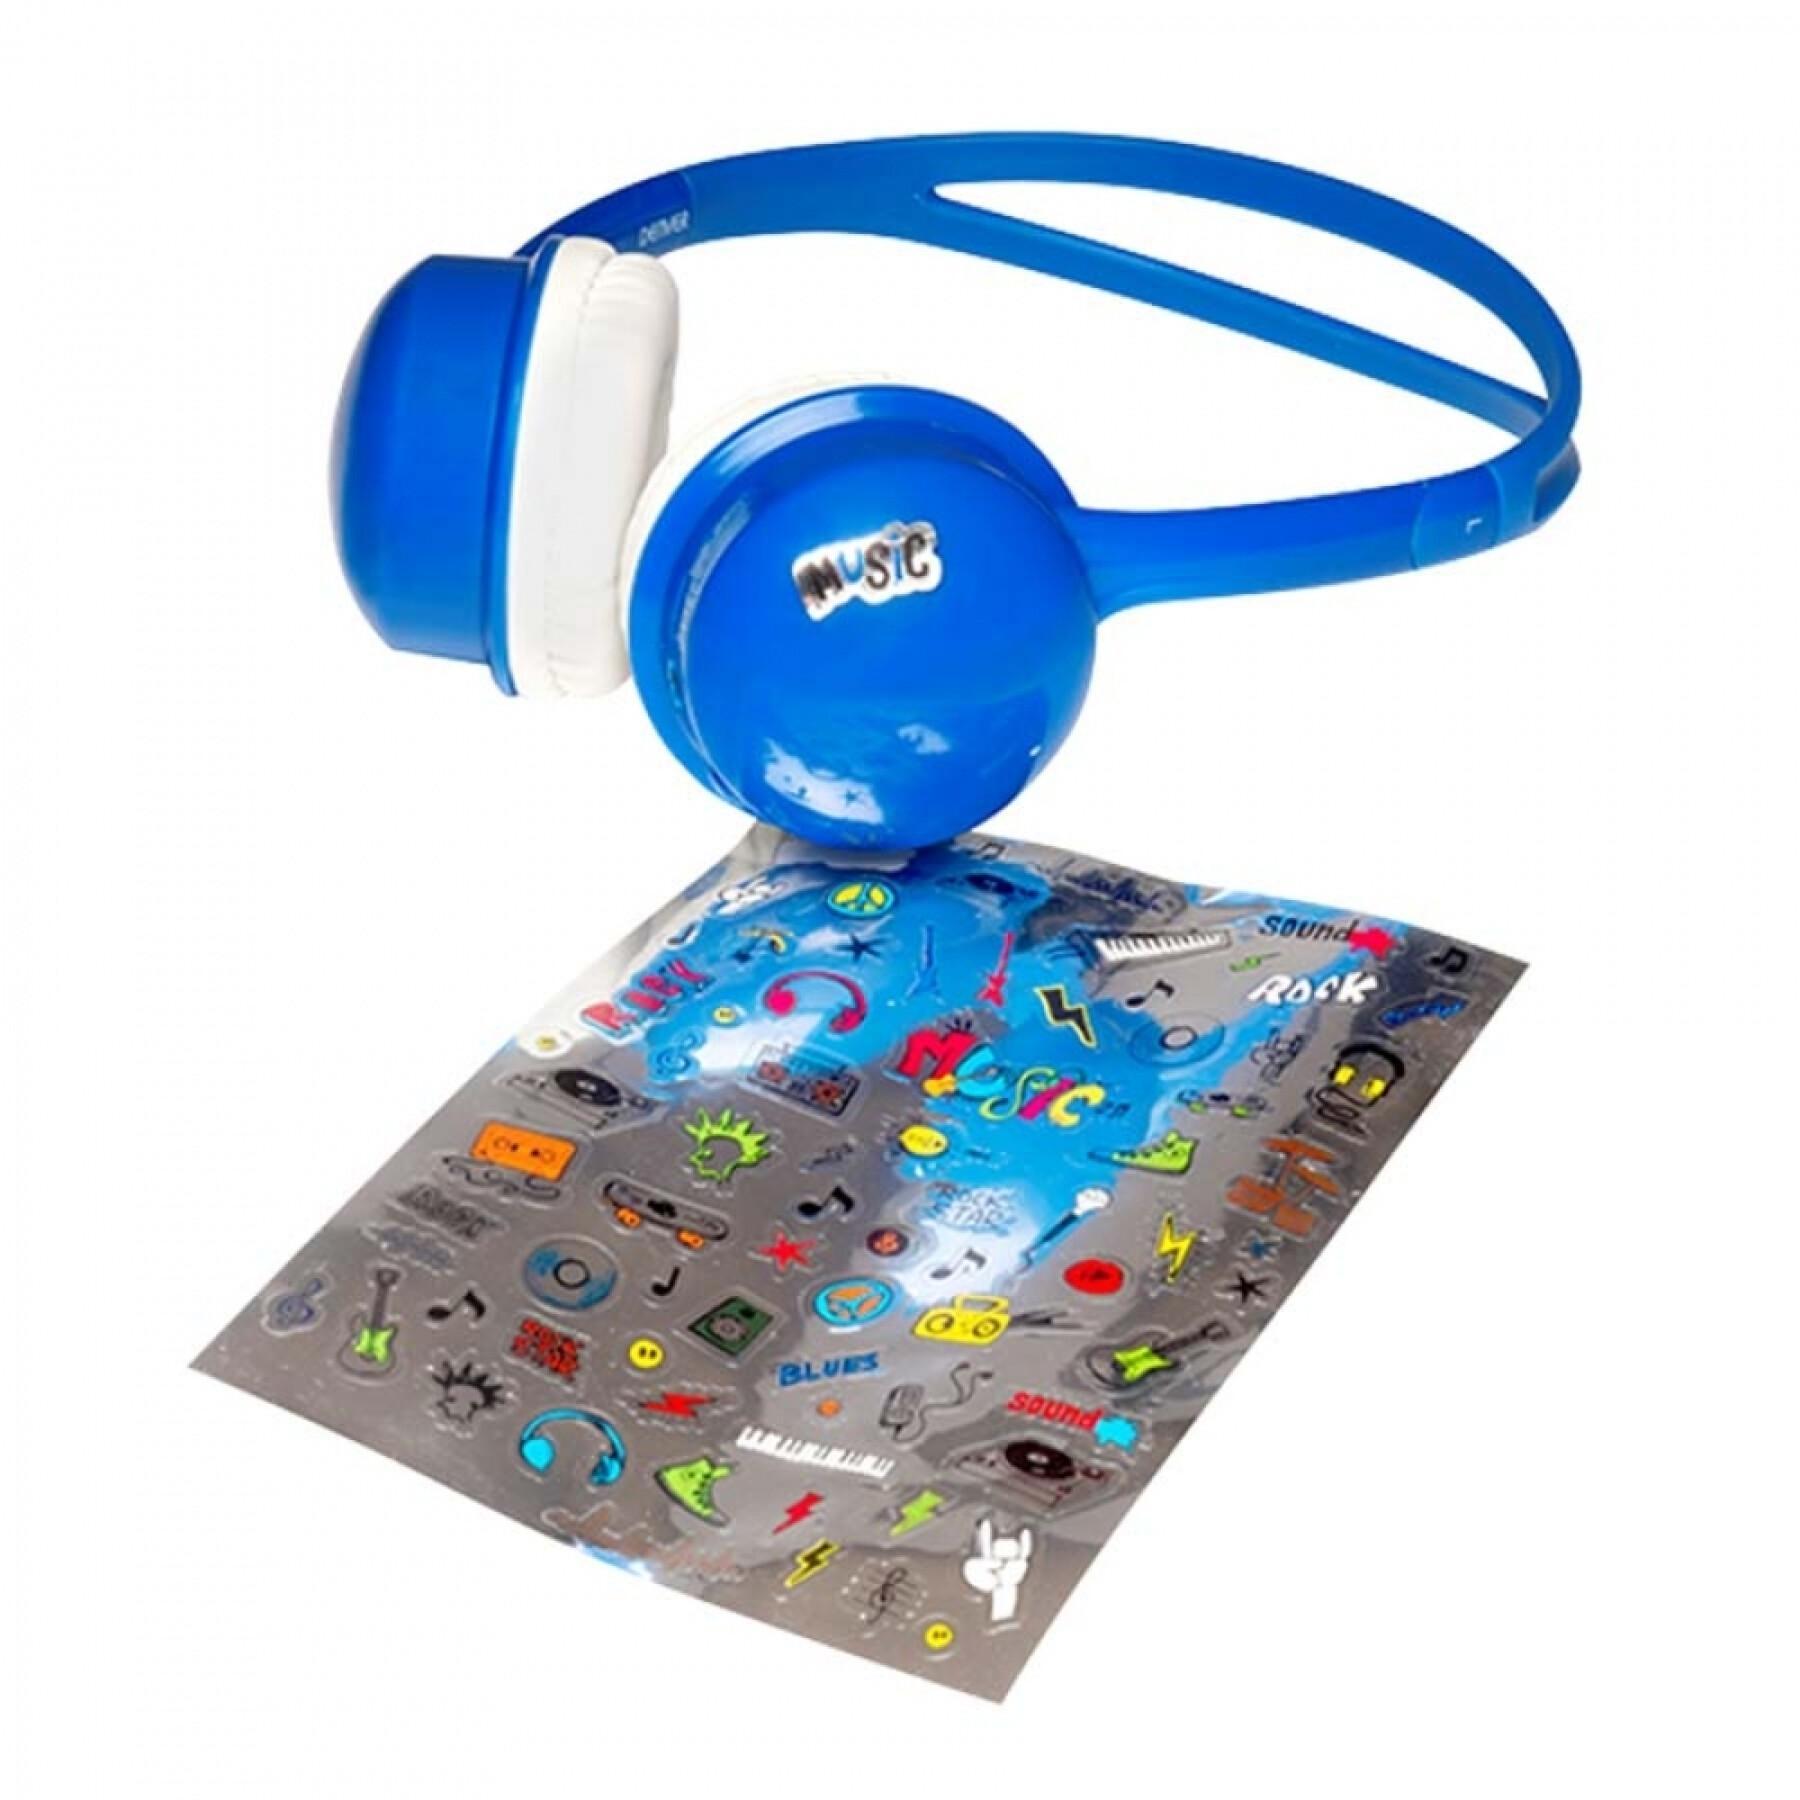 Wireless bluetooth headset for kids Denver